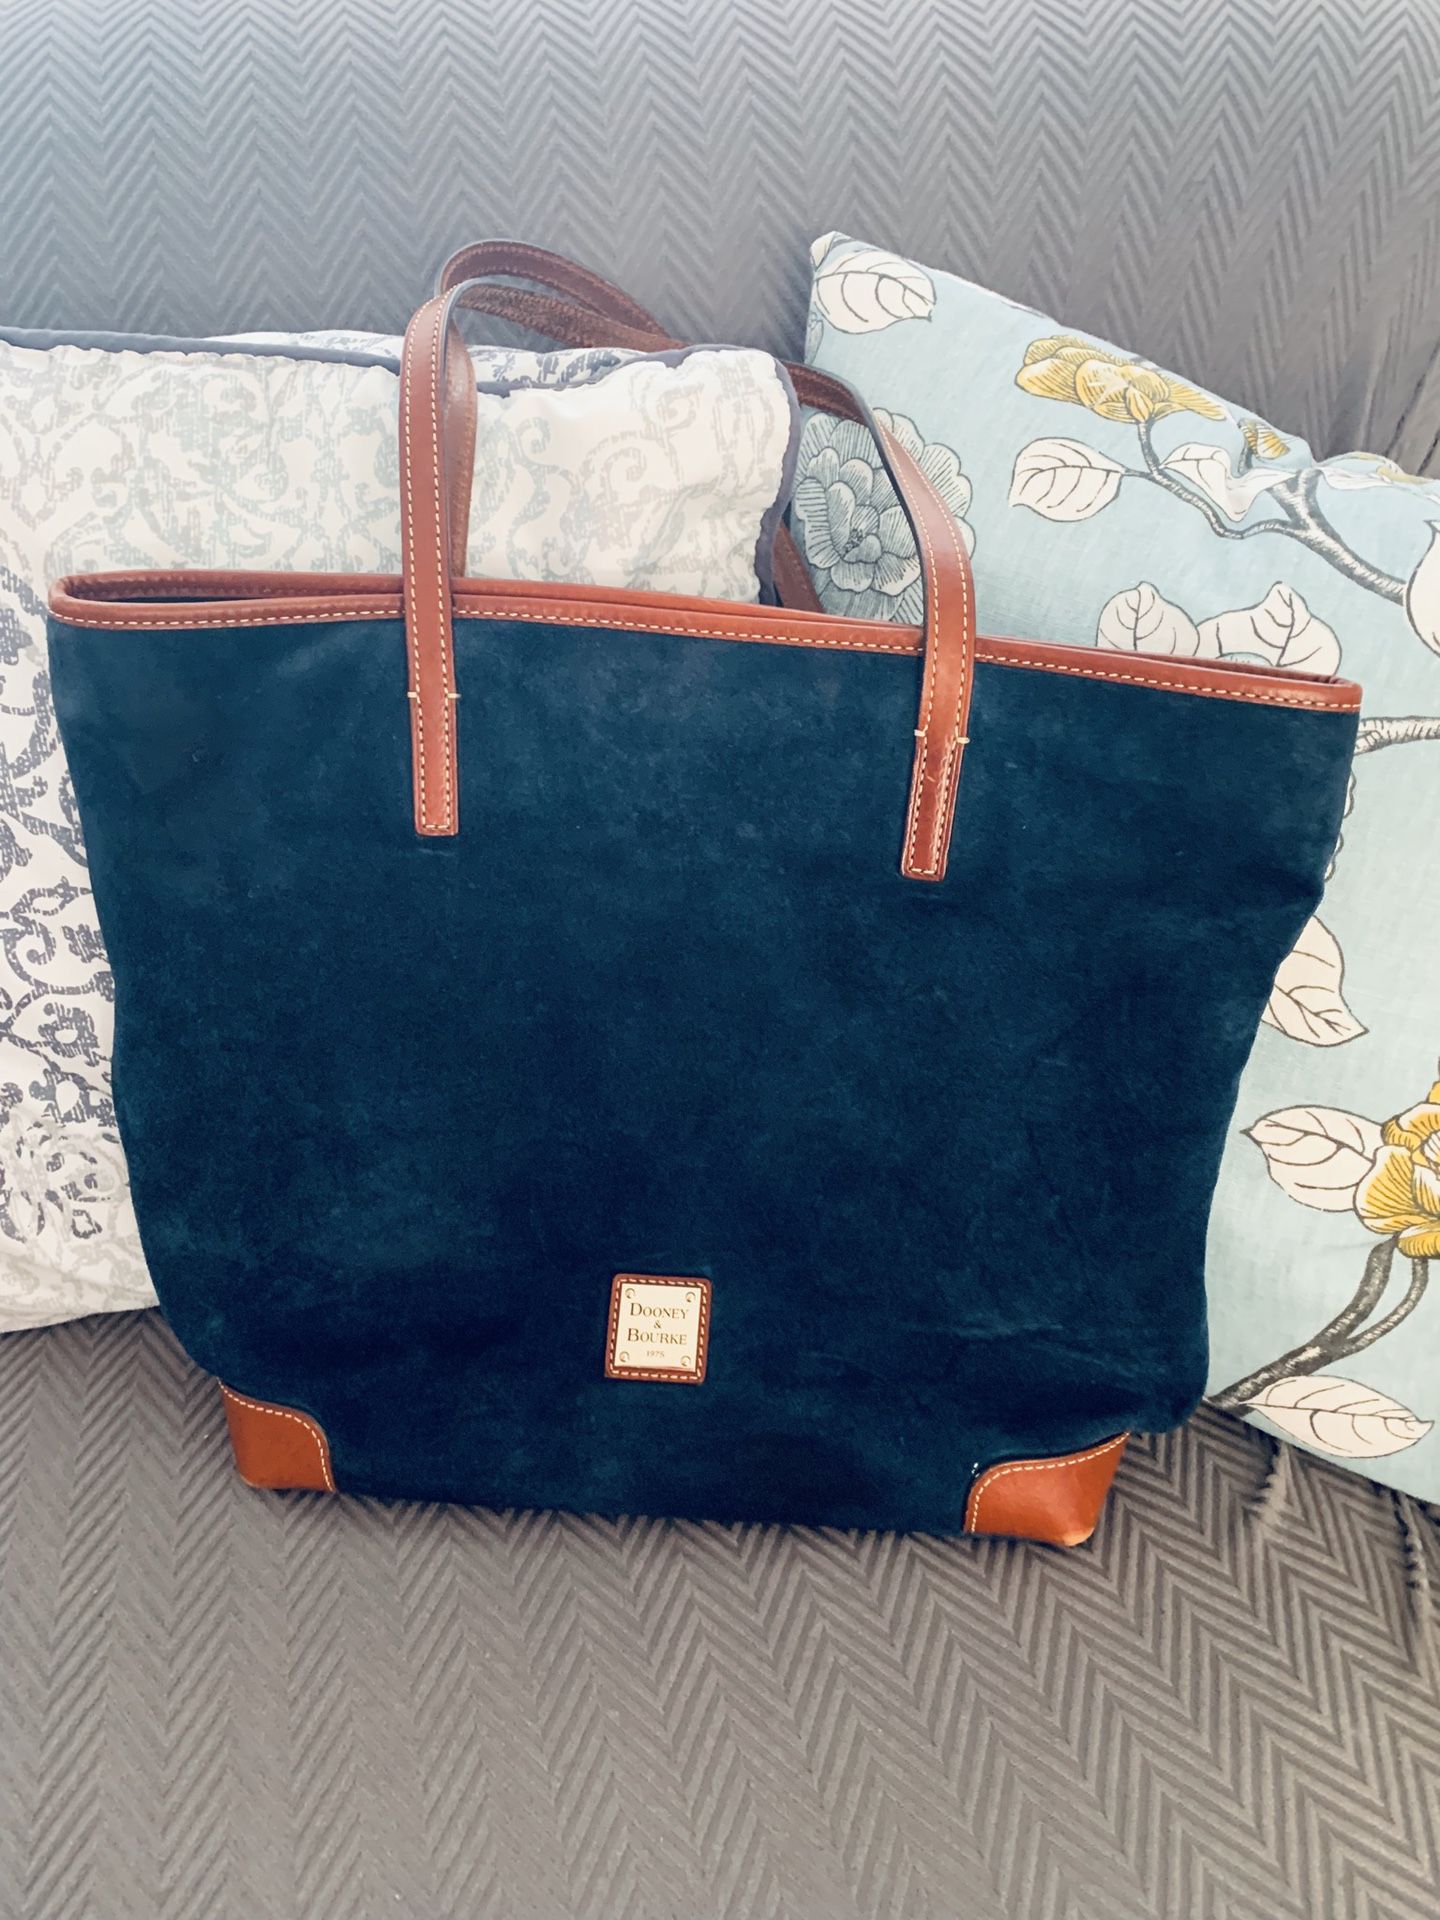 Beautiful Dooney & Bourke blue suede purse for sale